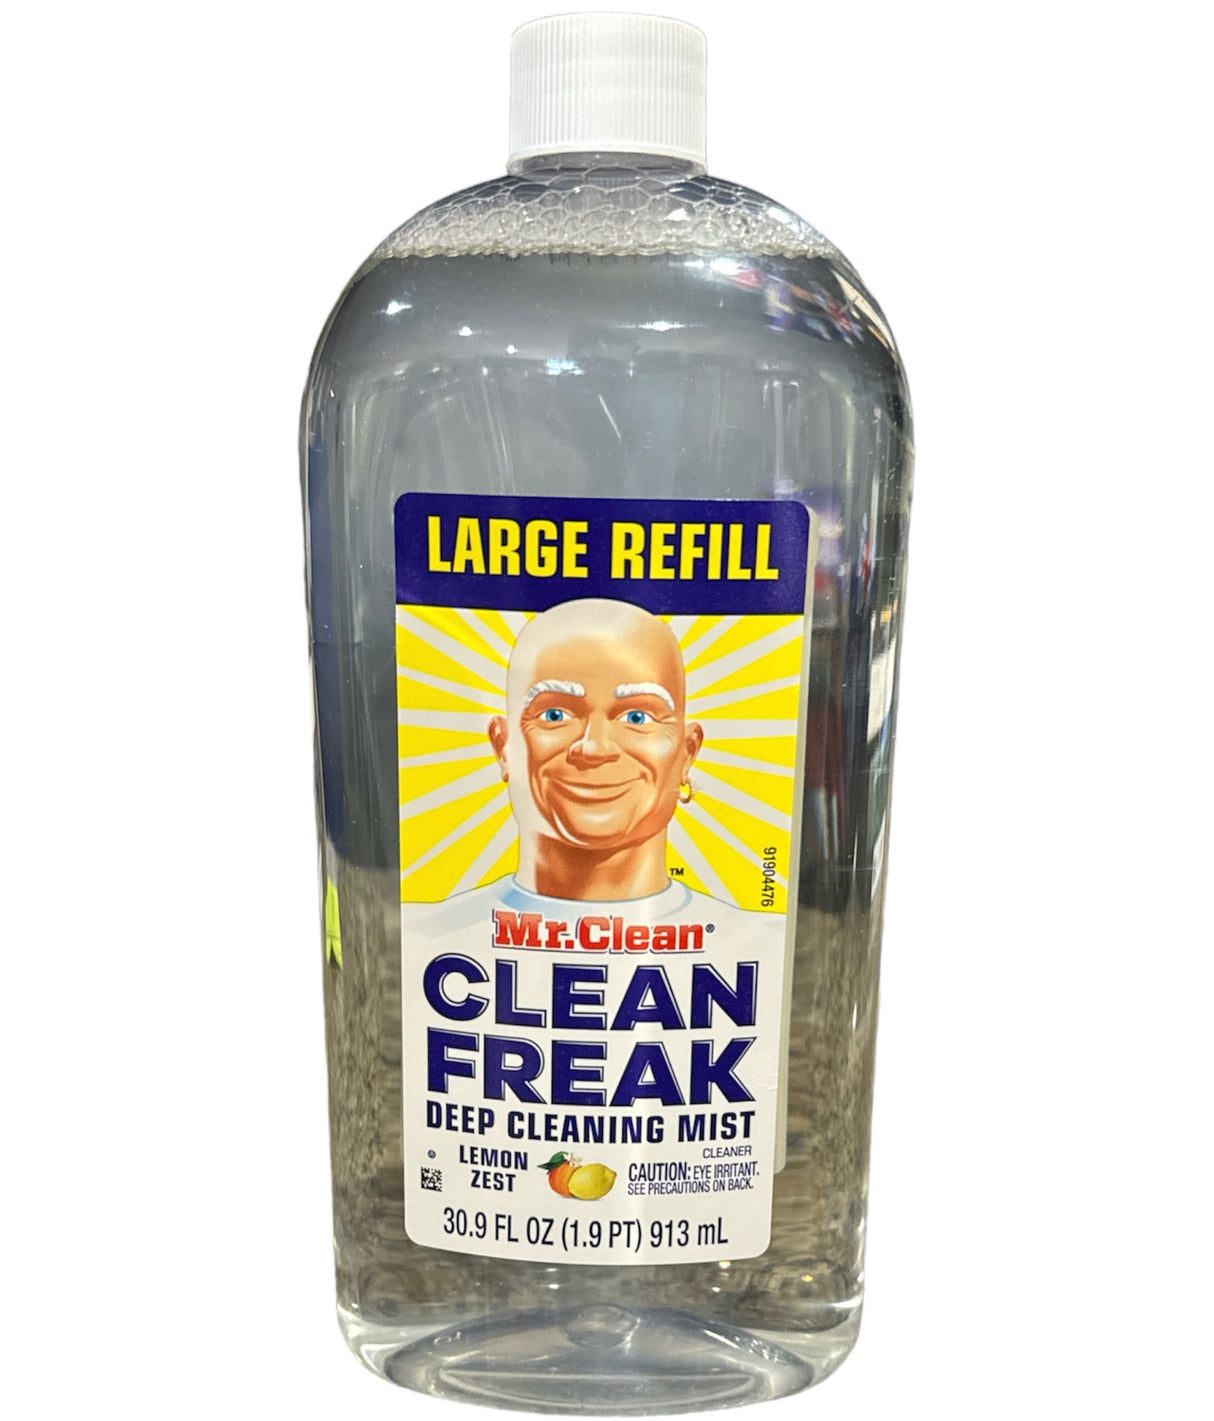 Mr. Clean Clean-Freak Multi-Purpose Cleaner Refill (Lemon Zest, 30.9 fl oz)